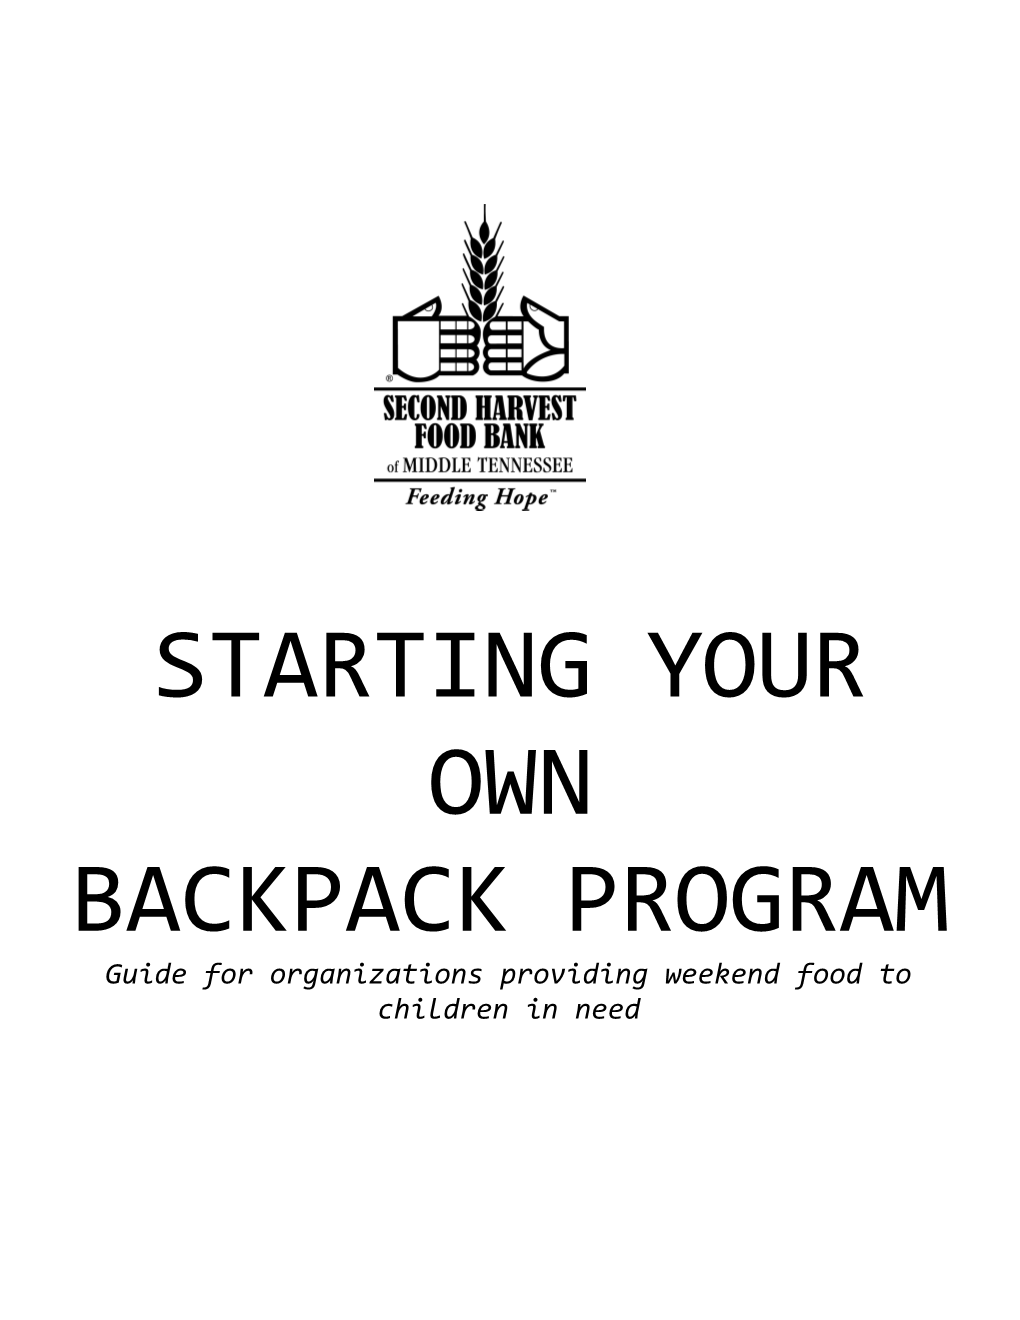 Checklist for Starting a Backpack Program